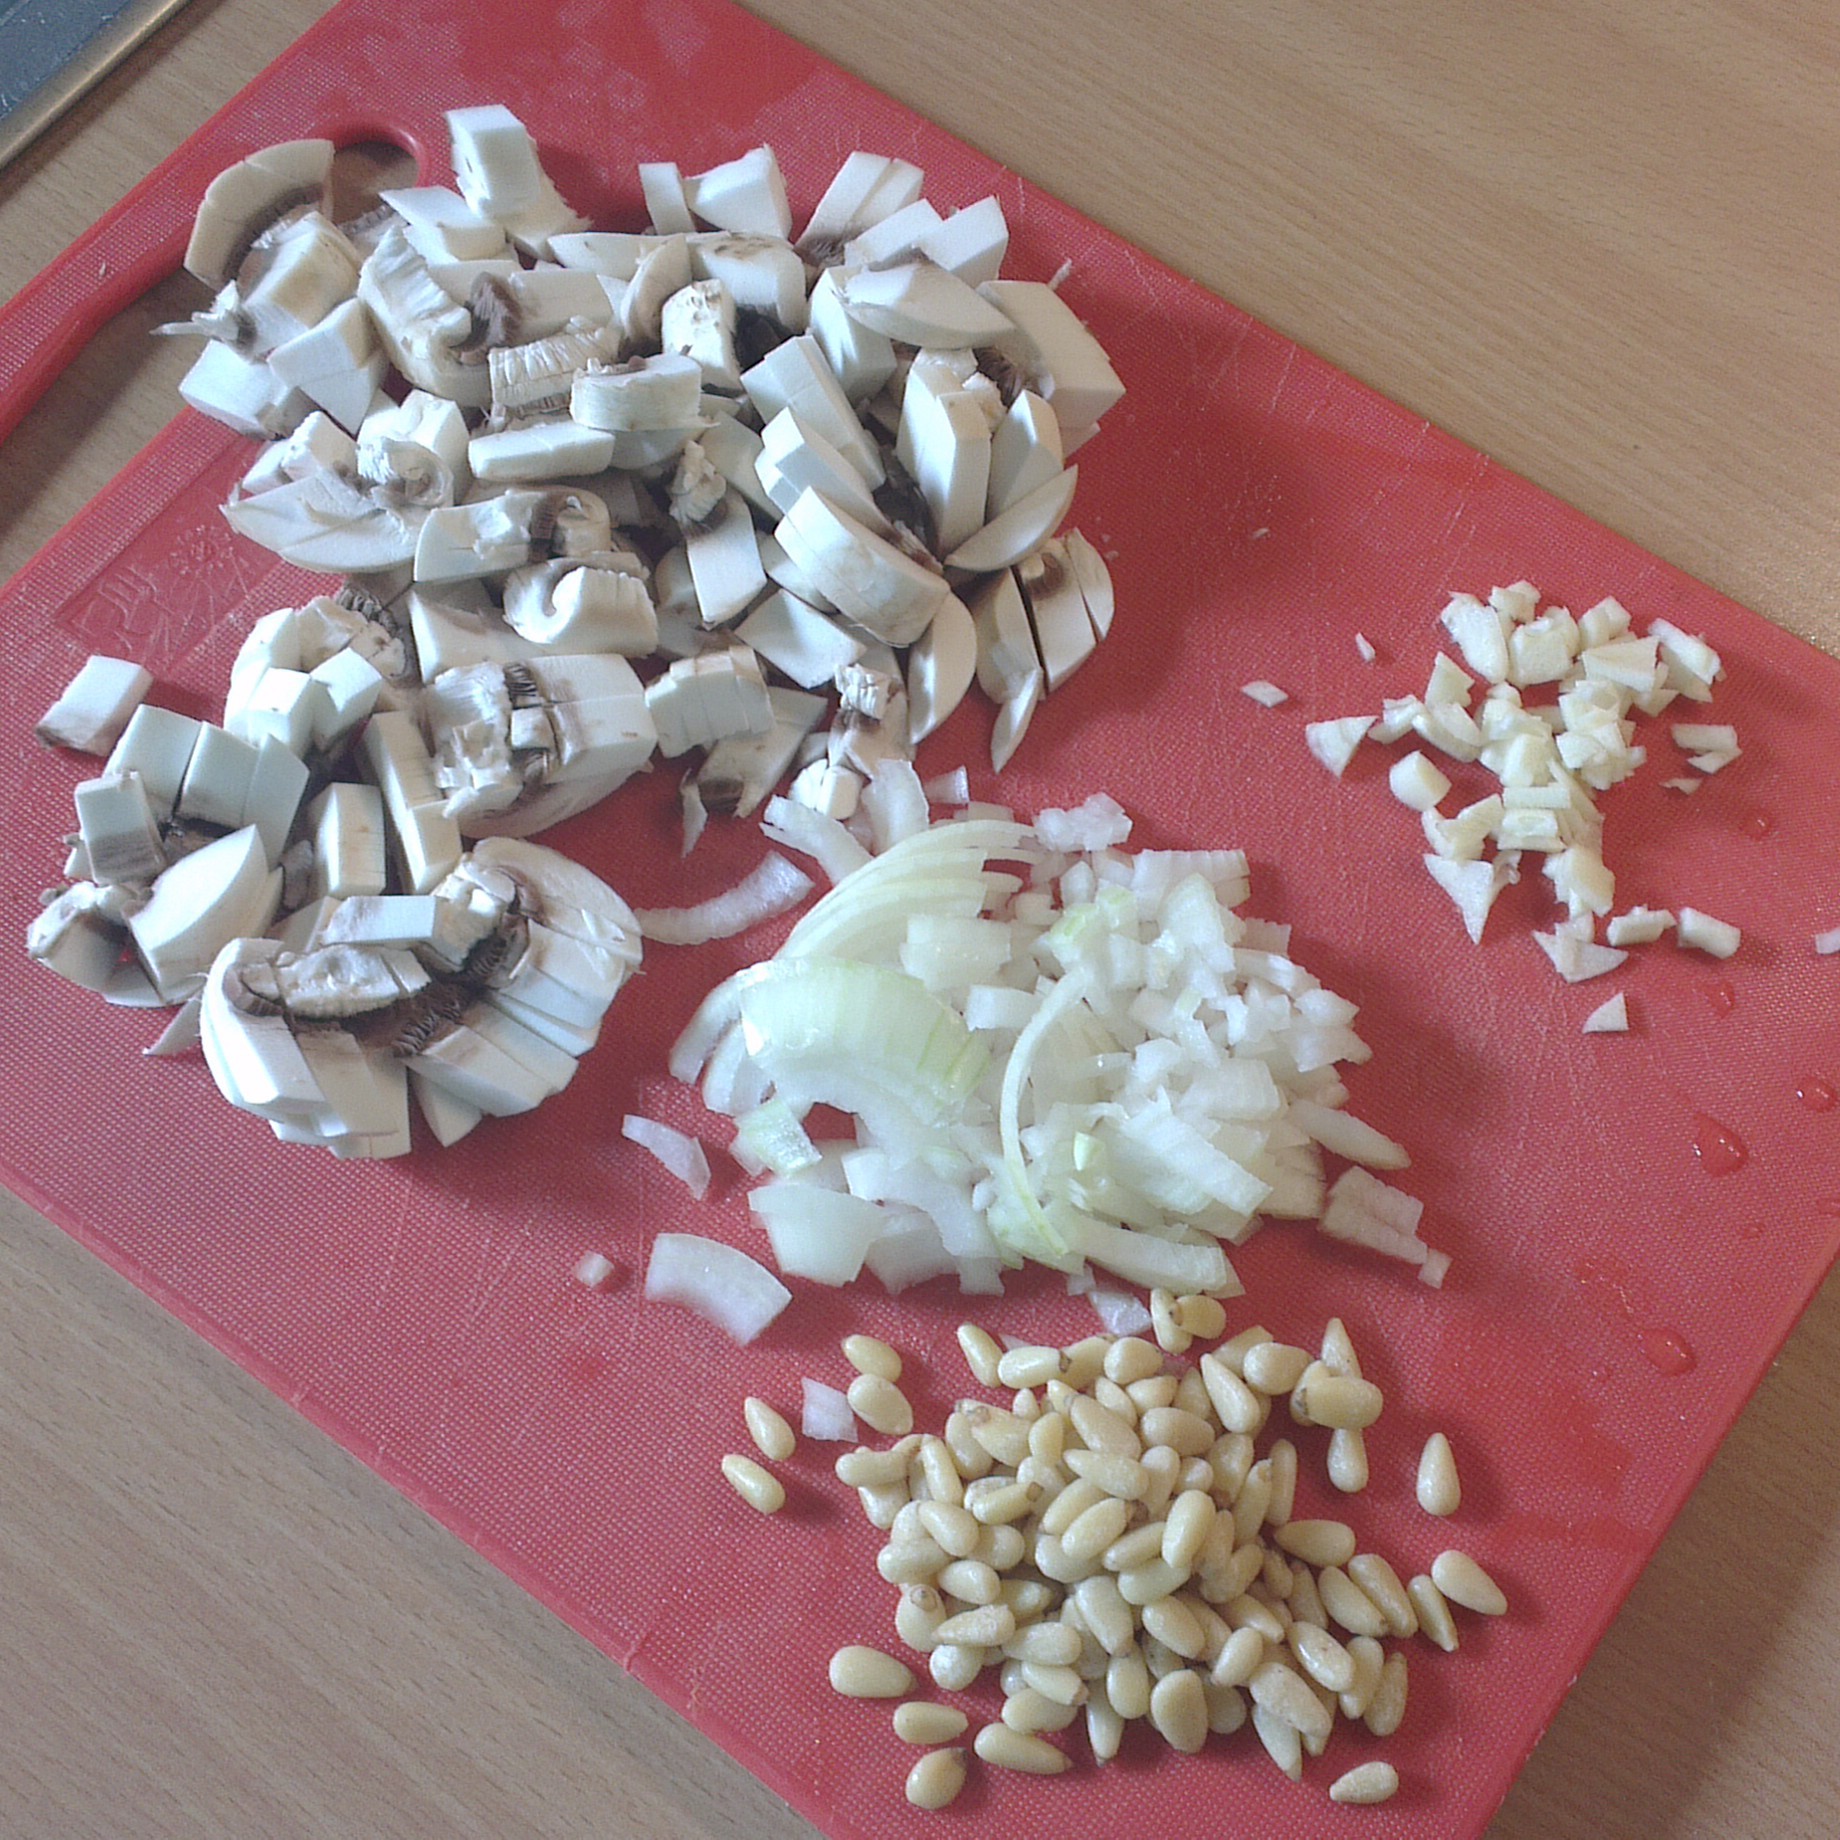 Sautéed onions, garlic, mushrooms and pine-nuts